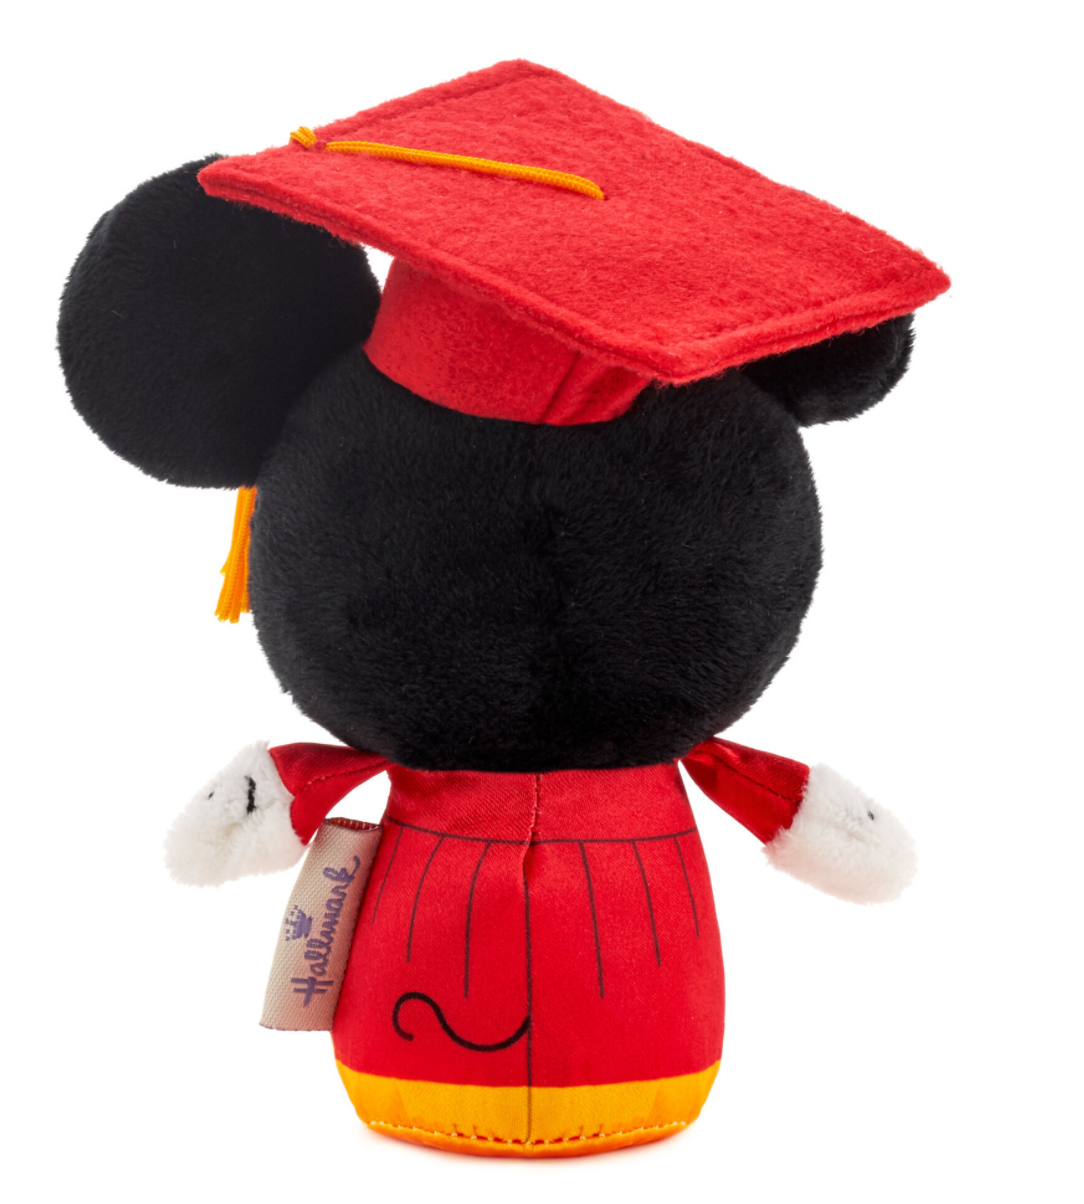 Hallmark Itty Bittys Disney Mickey Graduation Plush New with Tag